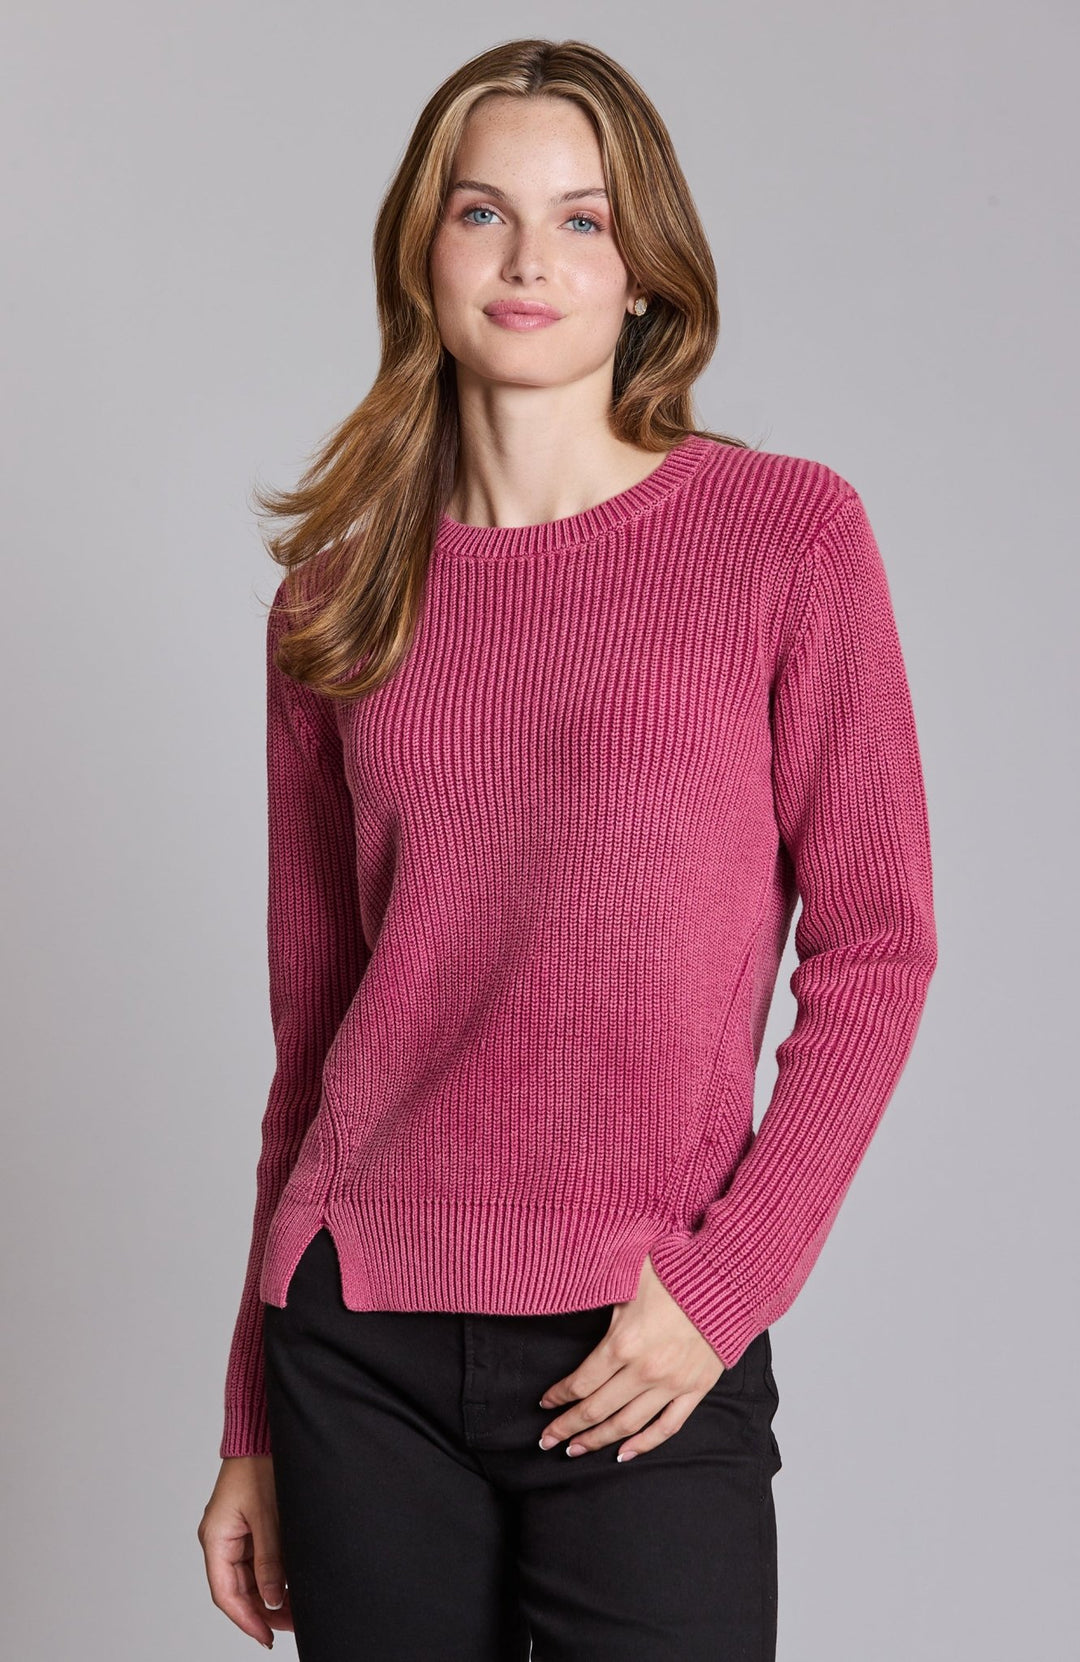 Tyler Boe - Mineral Wash Shaker Sweater: Garnet - Shorely Chic Boutique